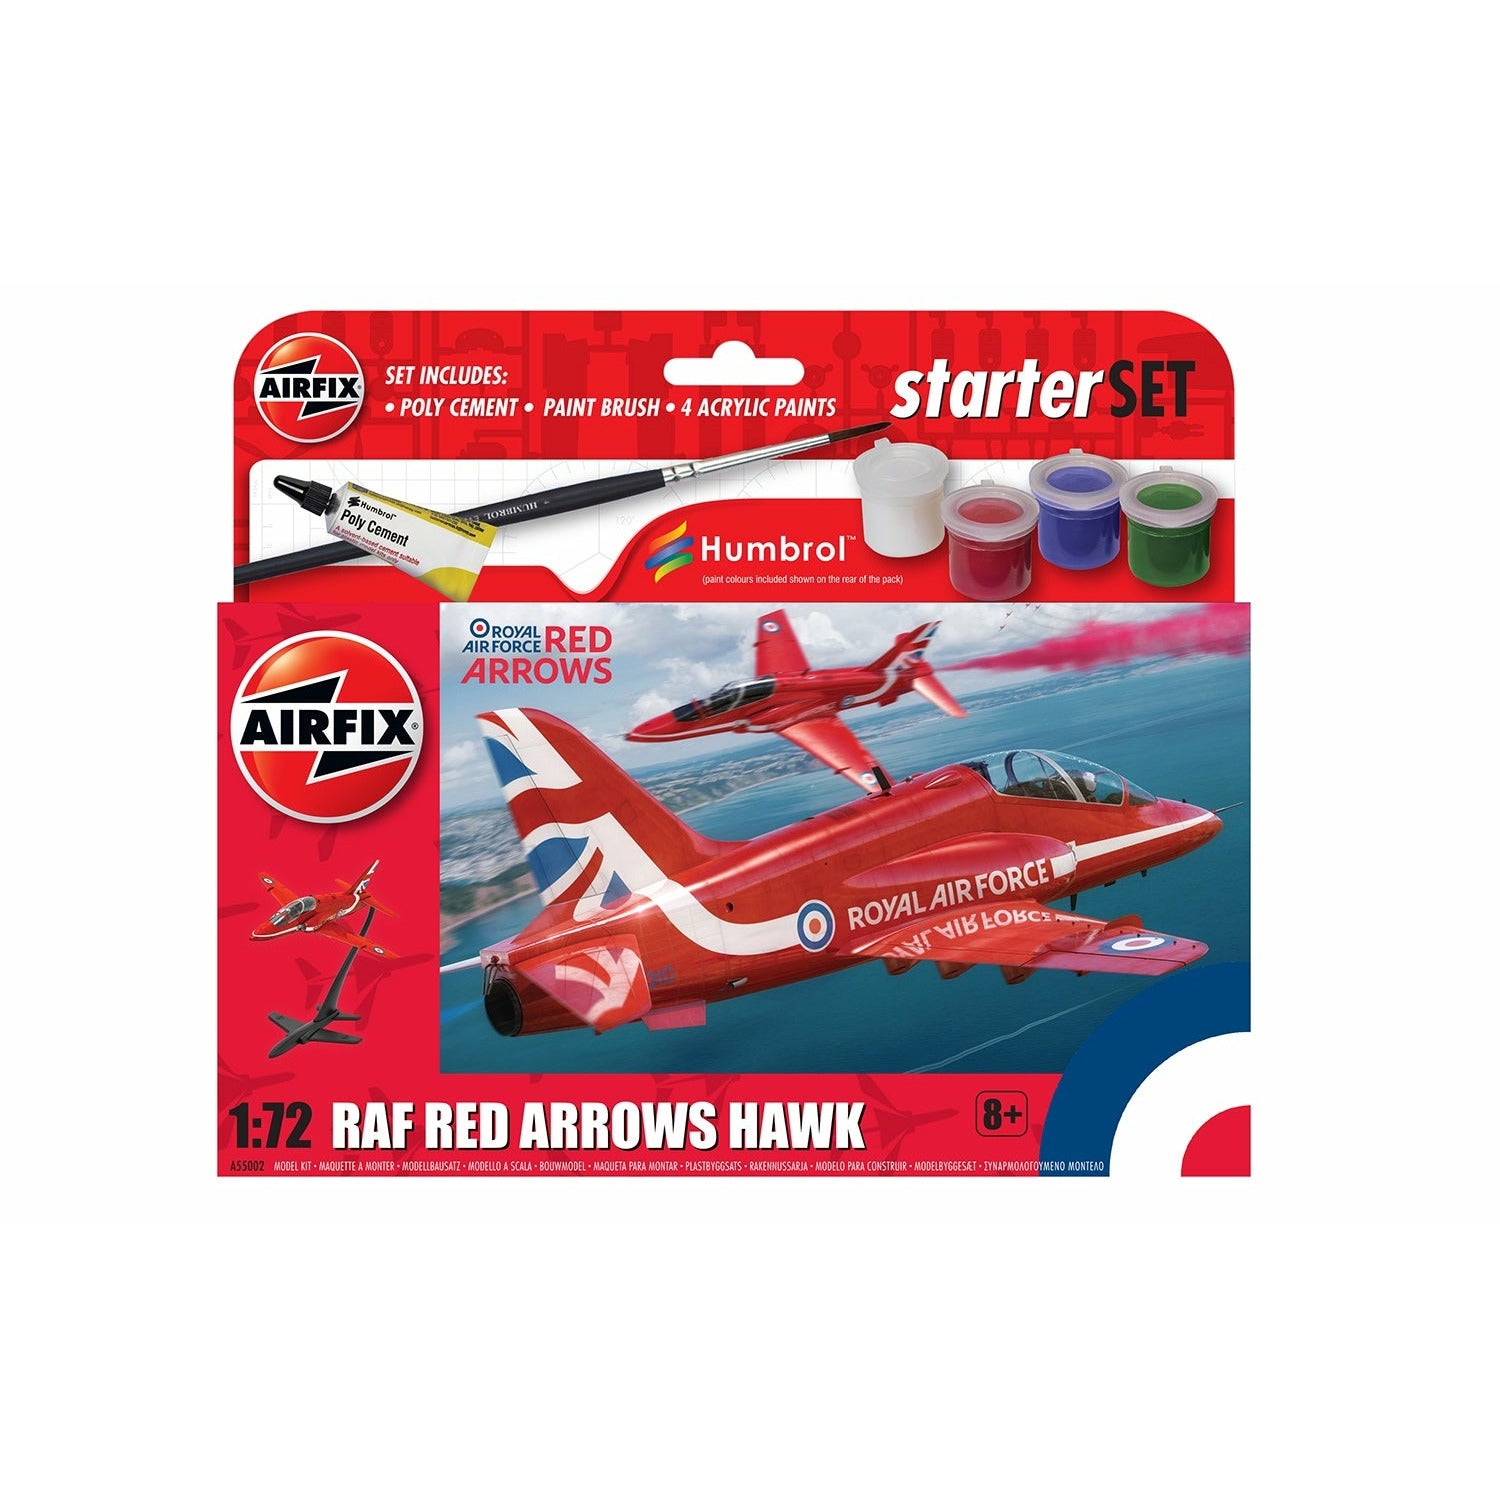 Red Arrows Hawk Beginner Set #55002 by Airfix 1/72